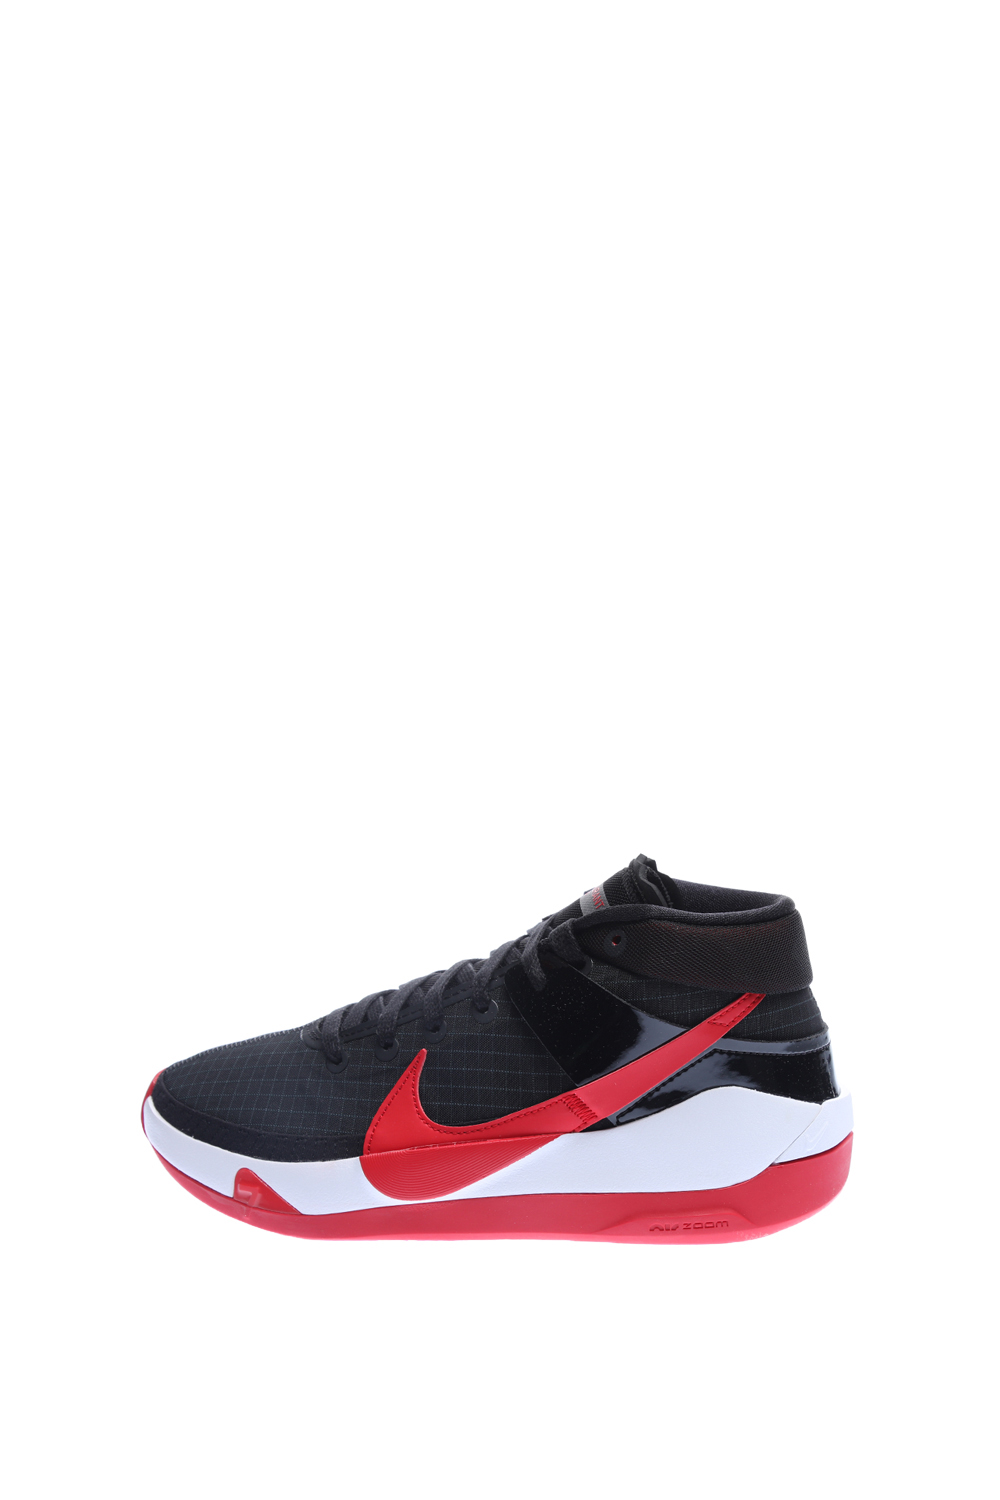 NIKE - Ανδρικά παπούτσια μπάσκετ KD13 μαύρα Ανδρικά/Παπούτσια/Αθλητικά/Basketball